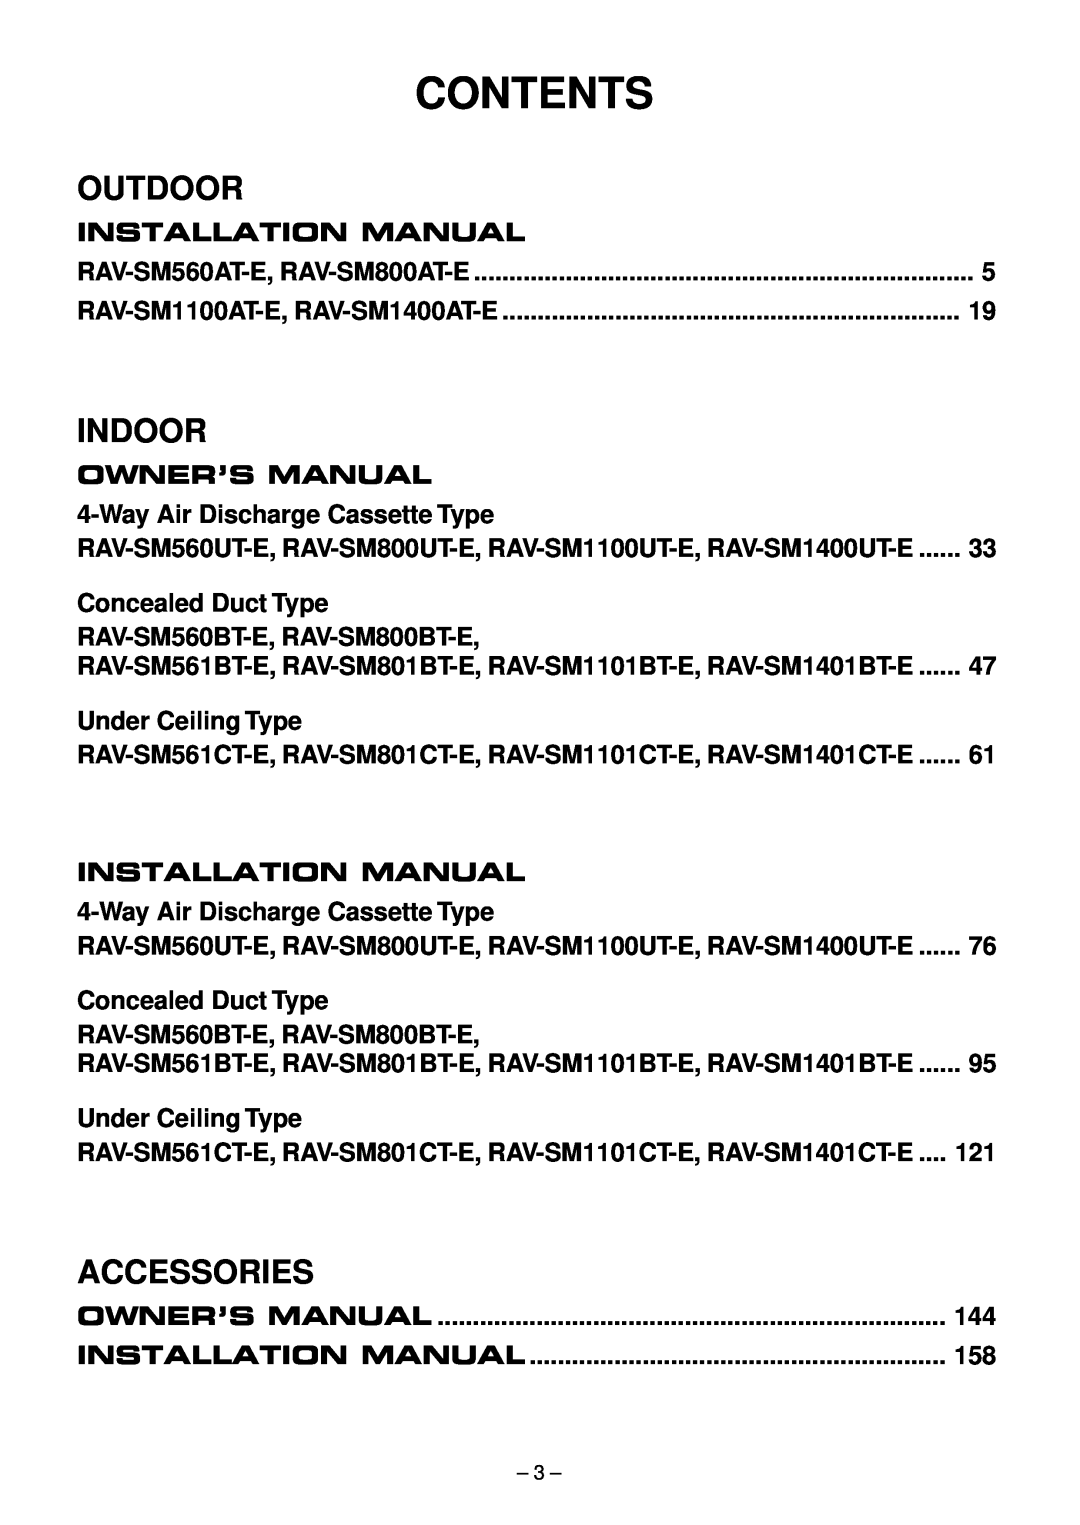 Balcar R410A service manual Contents, Outdoor, Indoor, Accessories, Installation Manual 